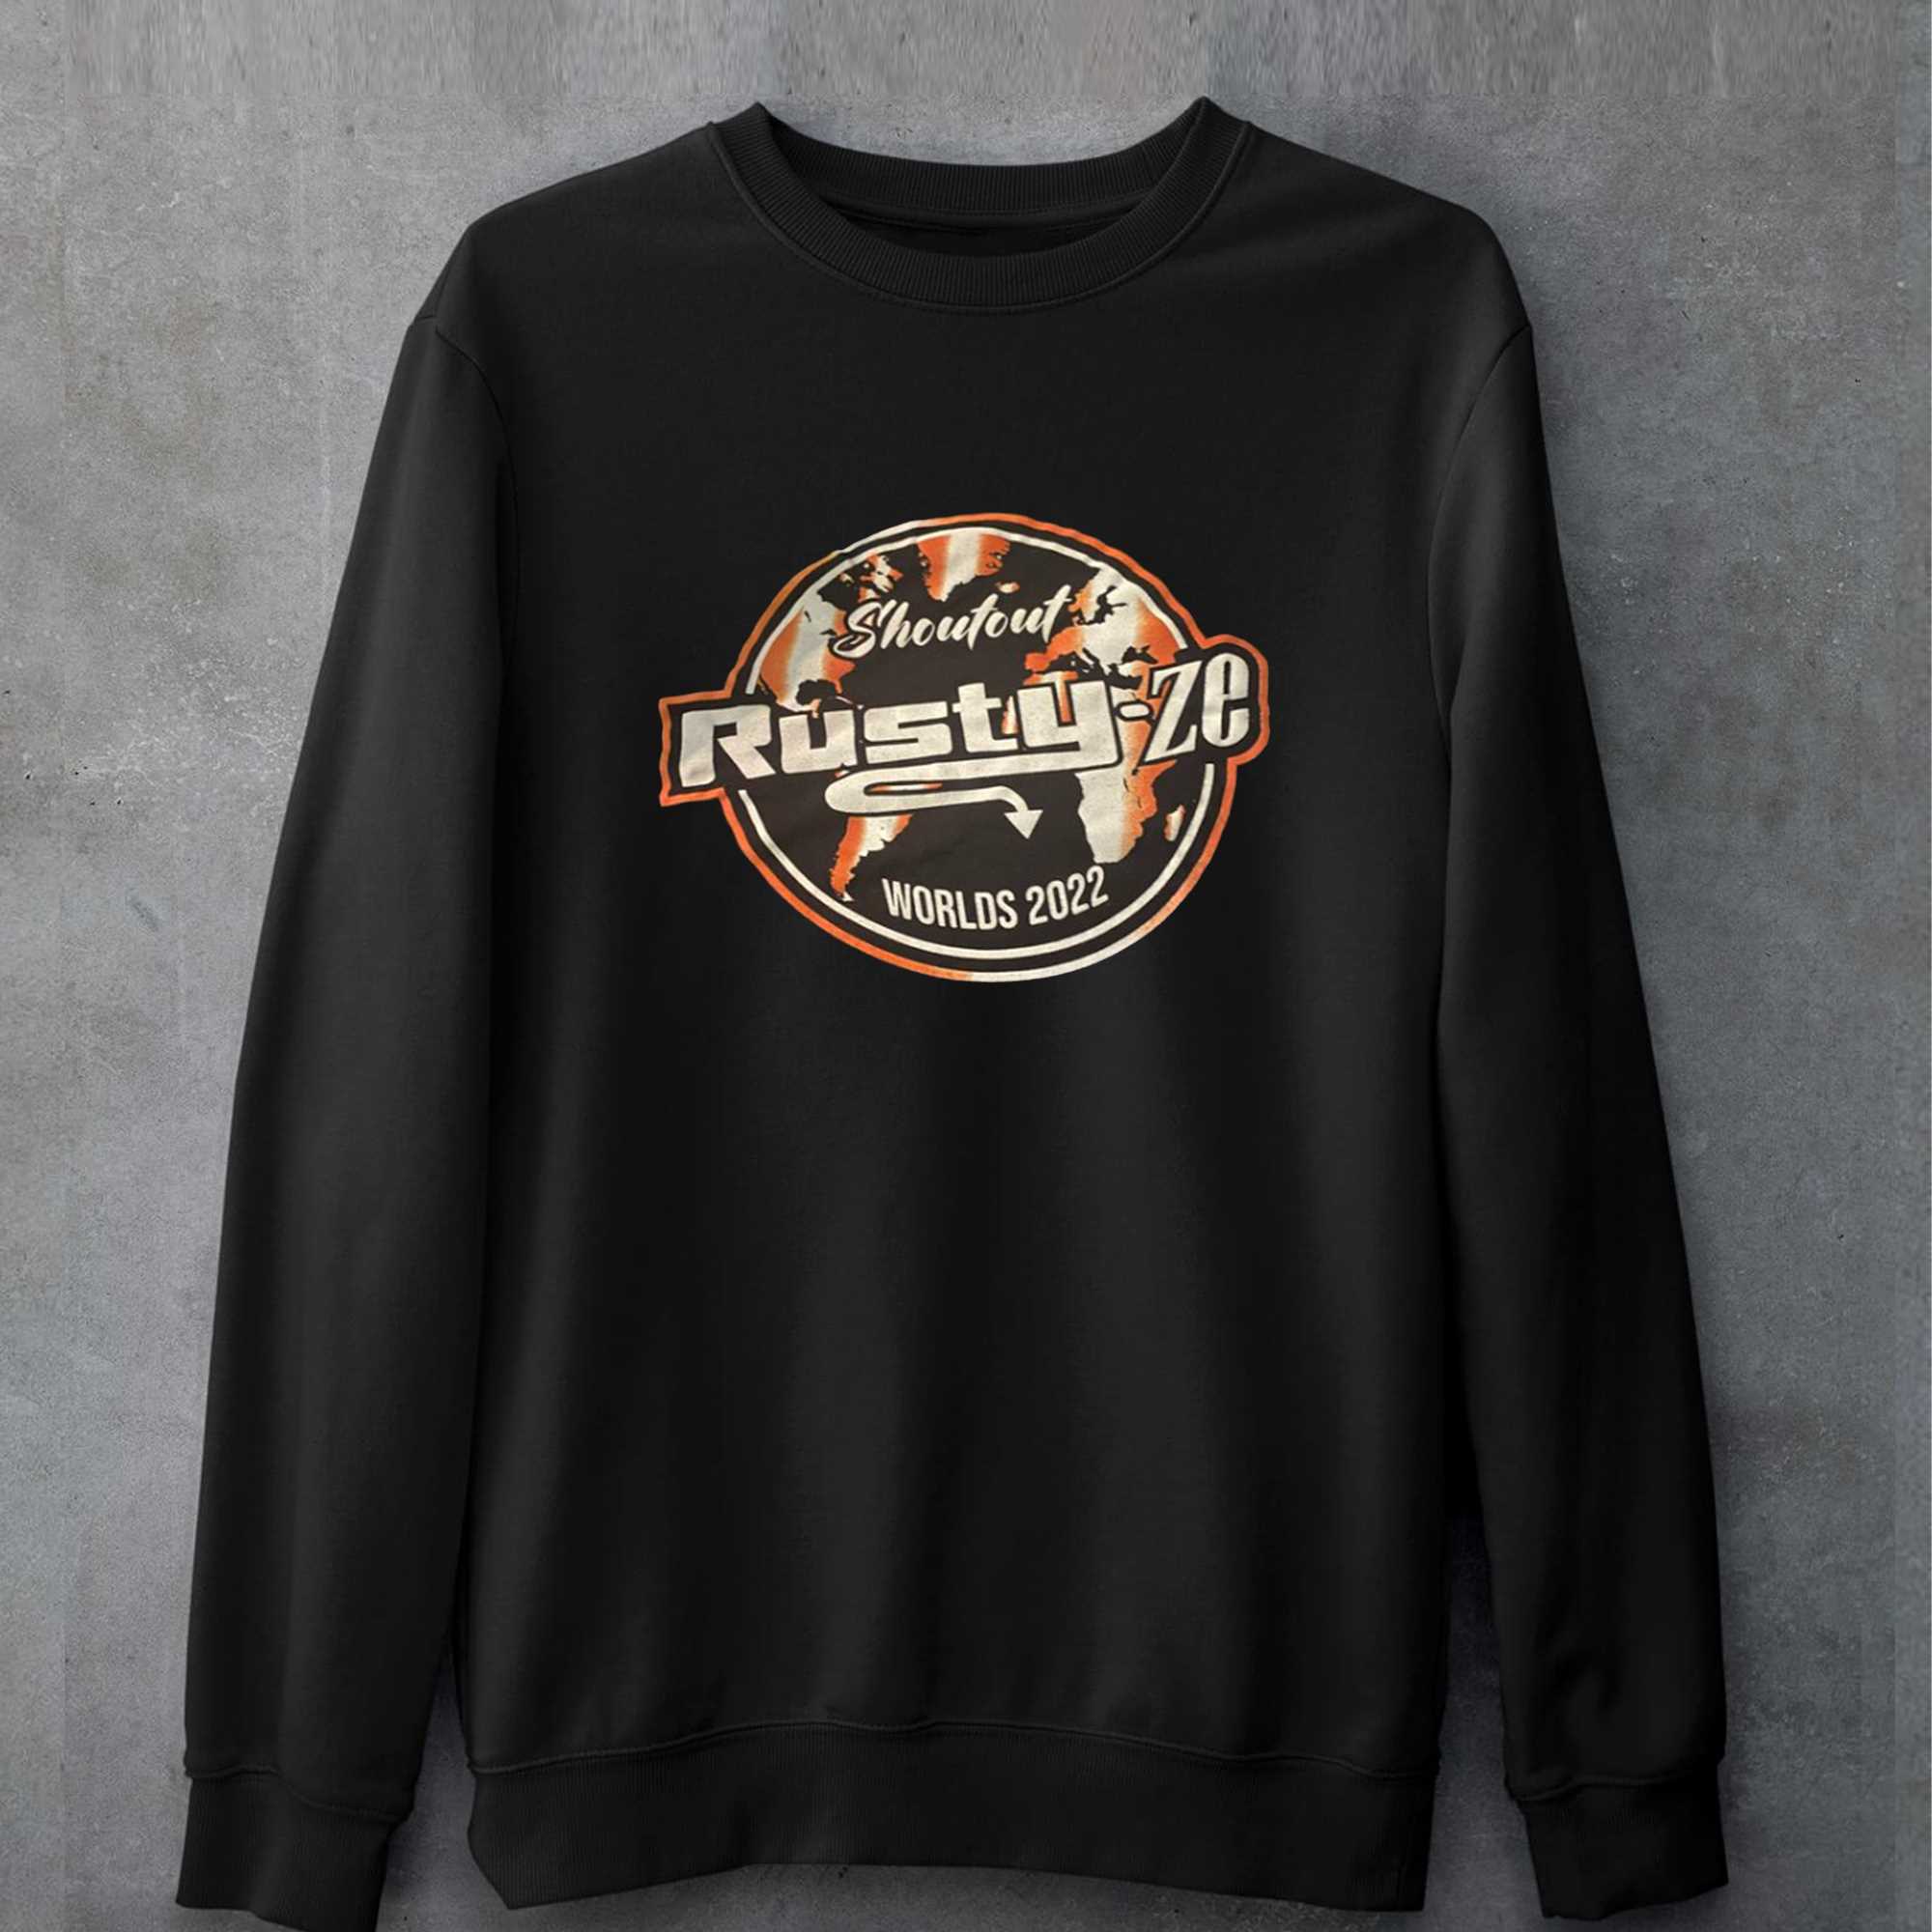 Shoutout Rusty-ze Worlds 2023 T-shirt 